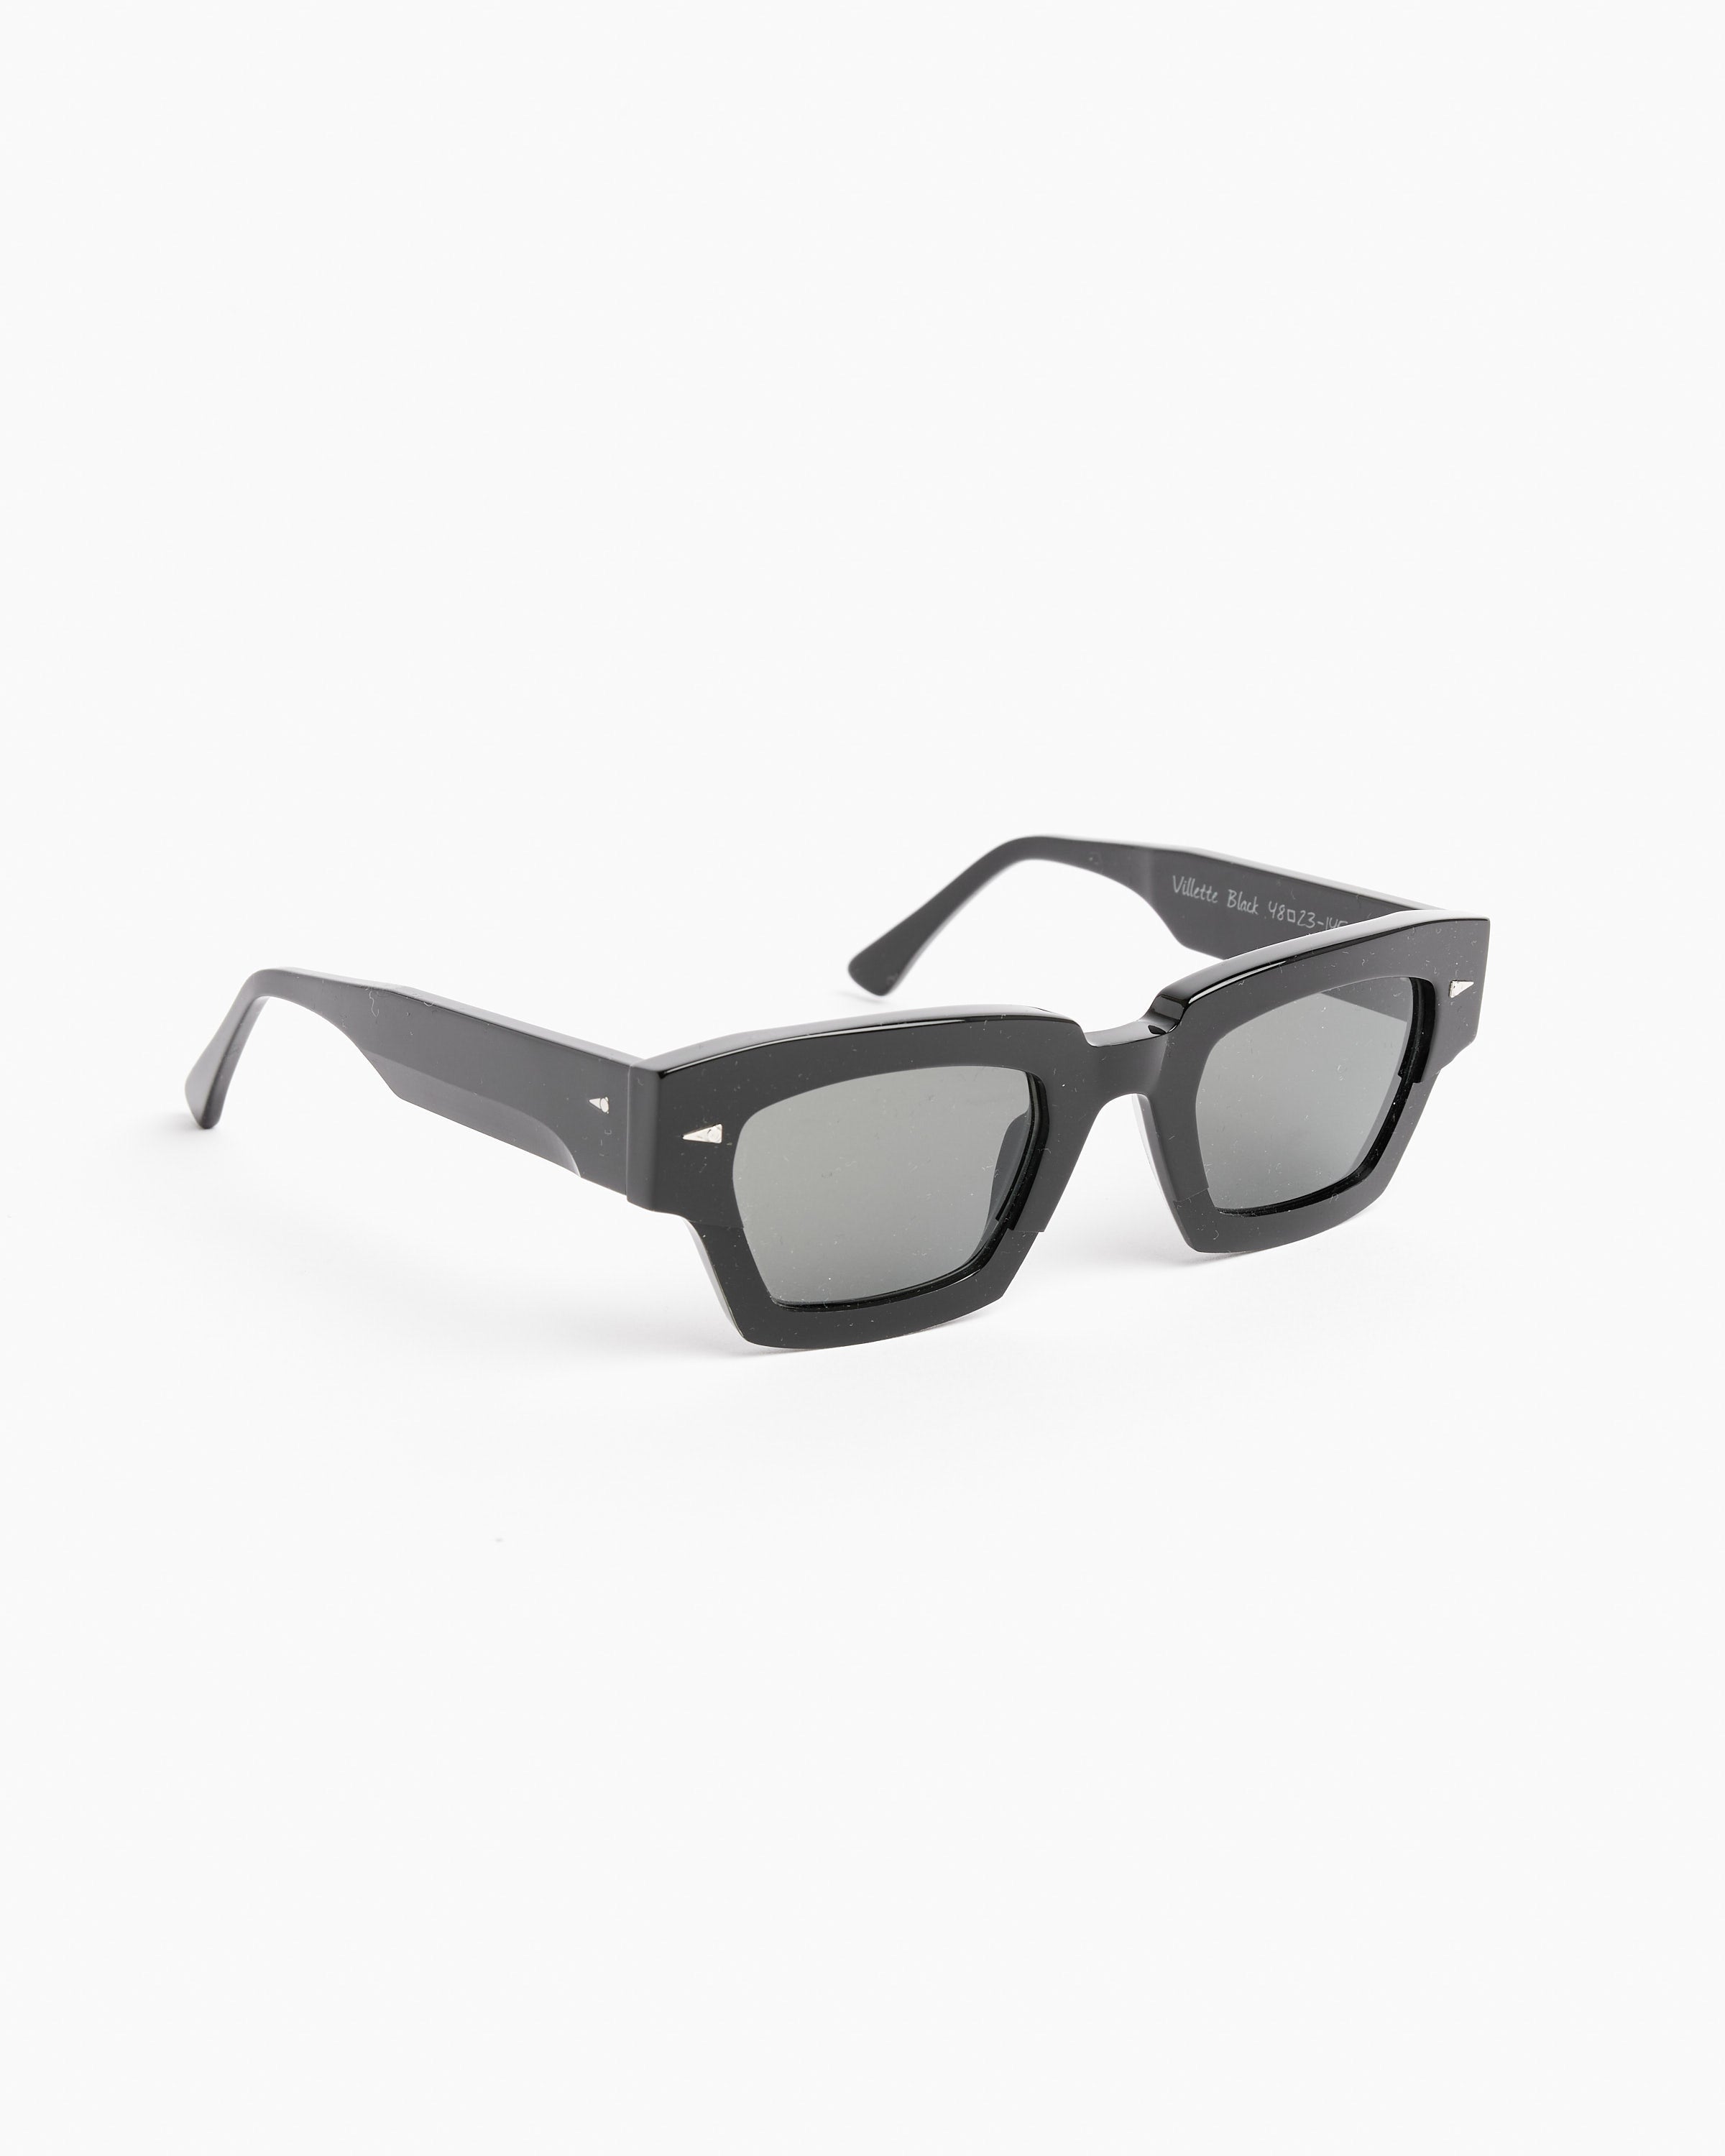 Villette Sunglasses in Black/Grey